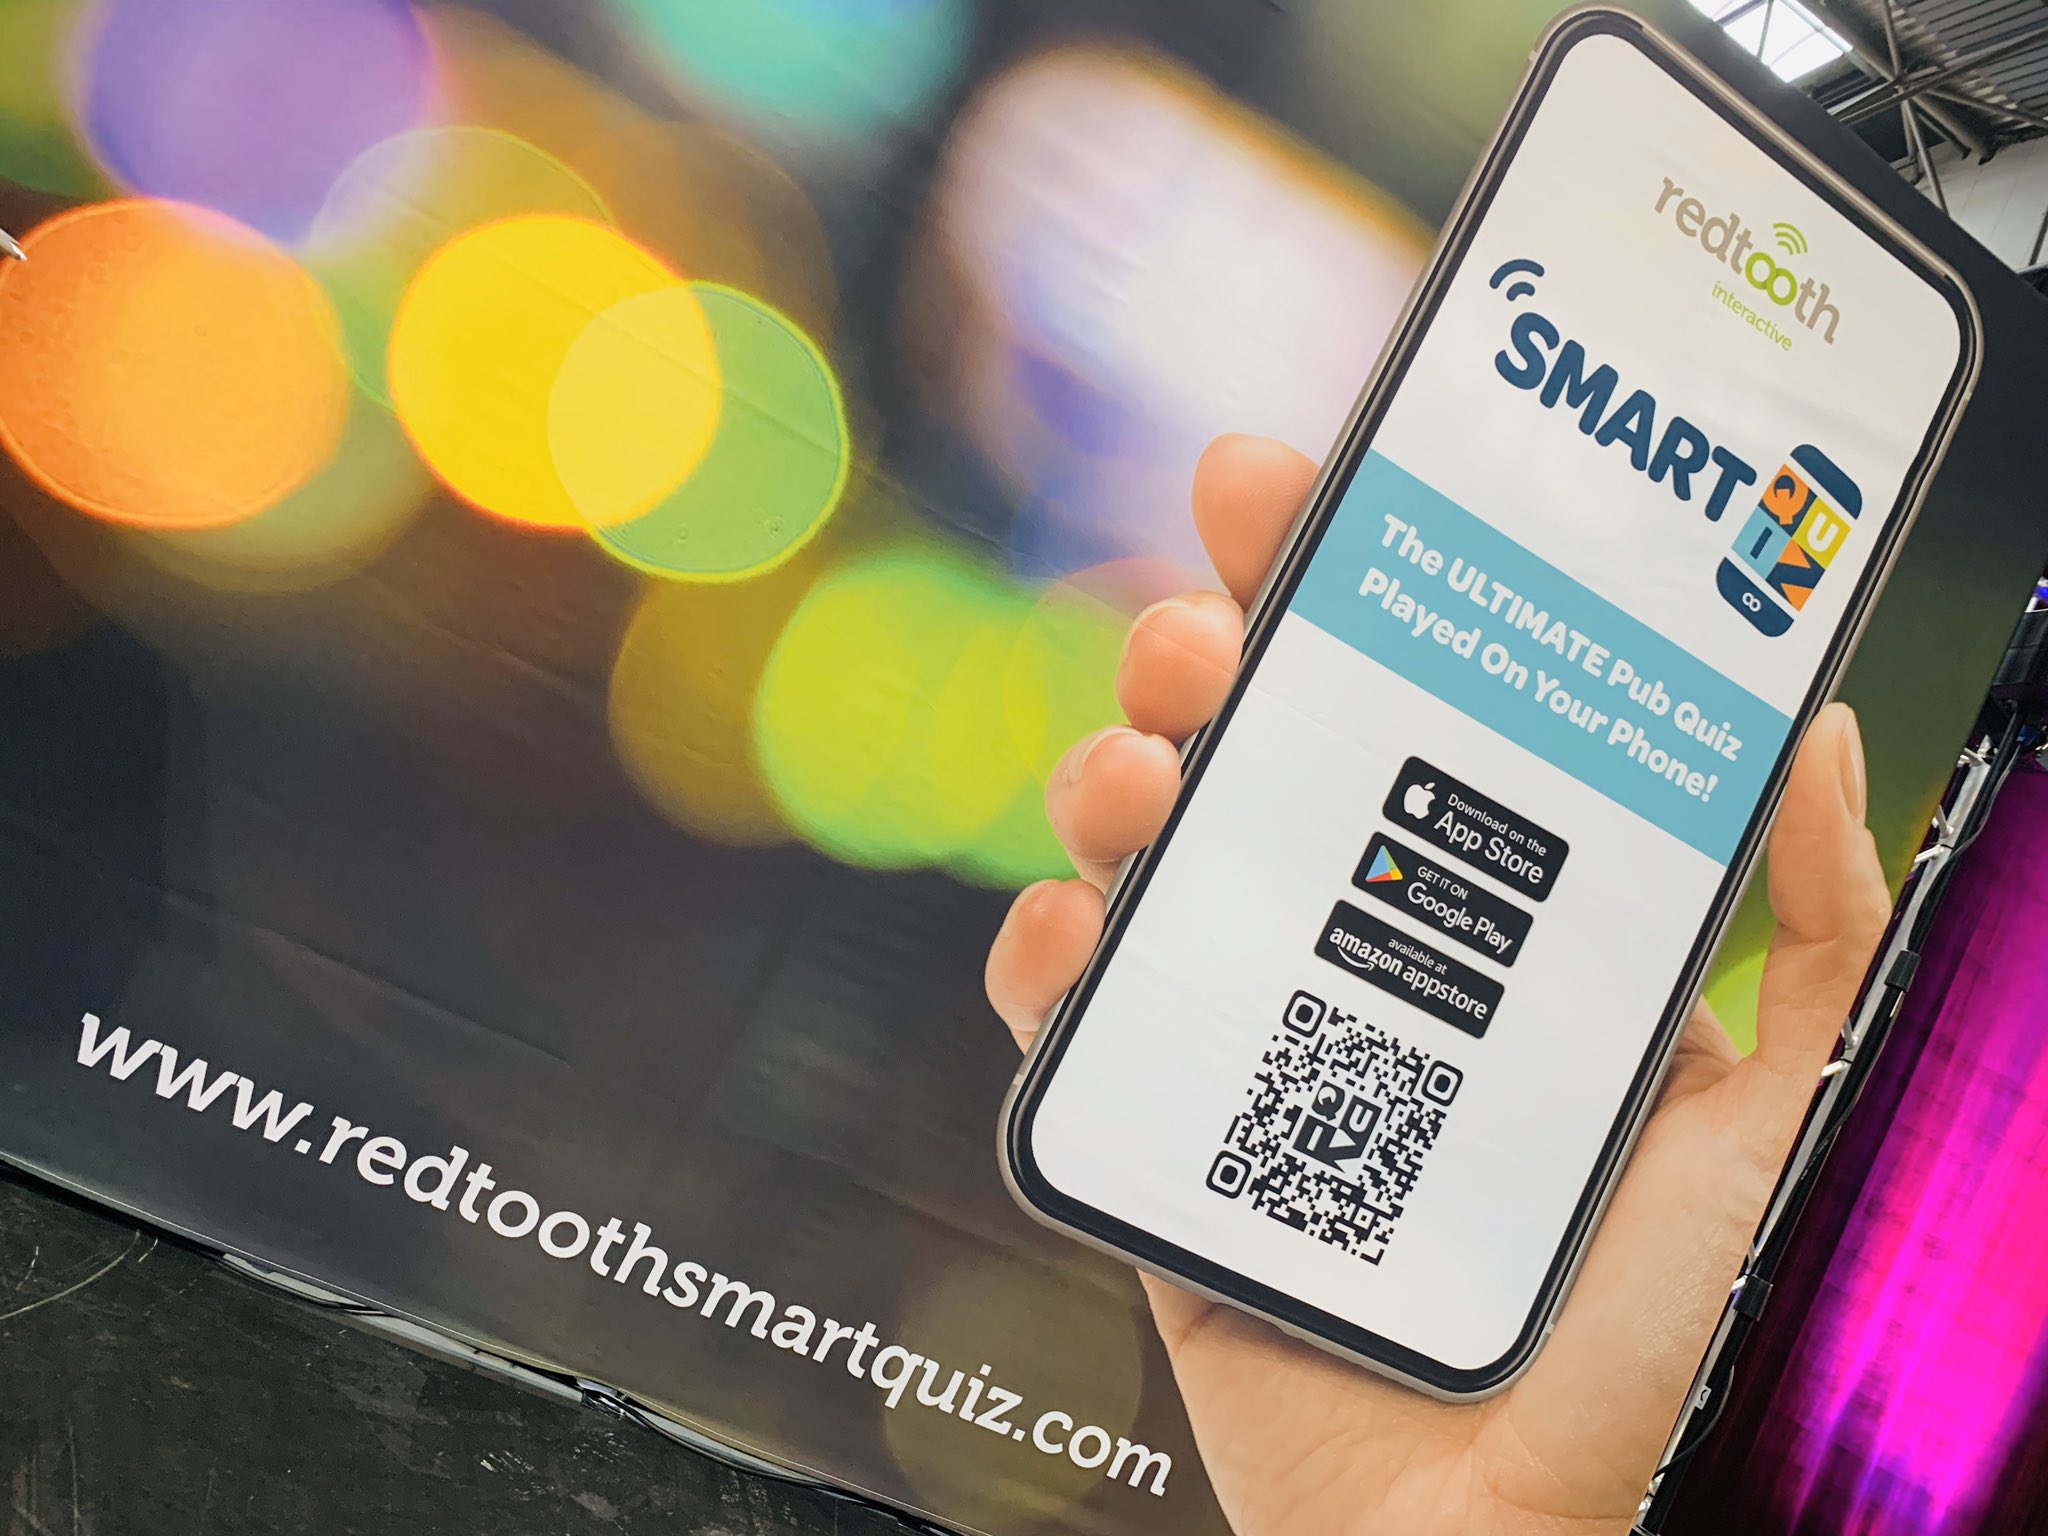 Redtooth SmartQuiz on the App Store